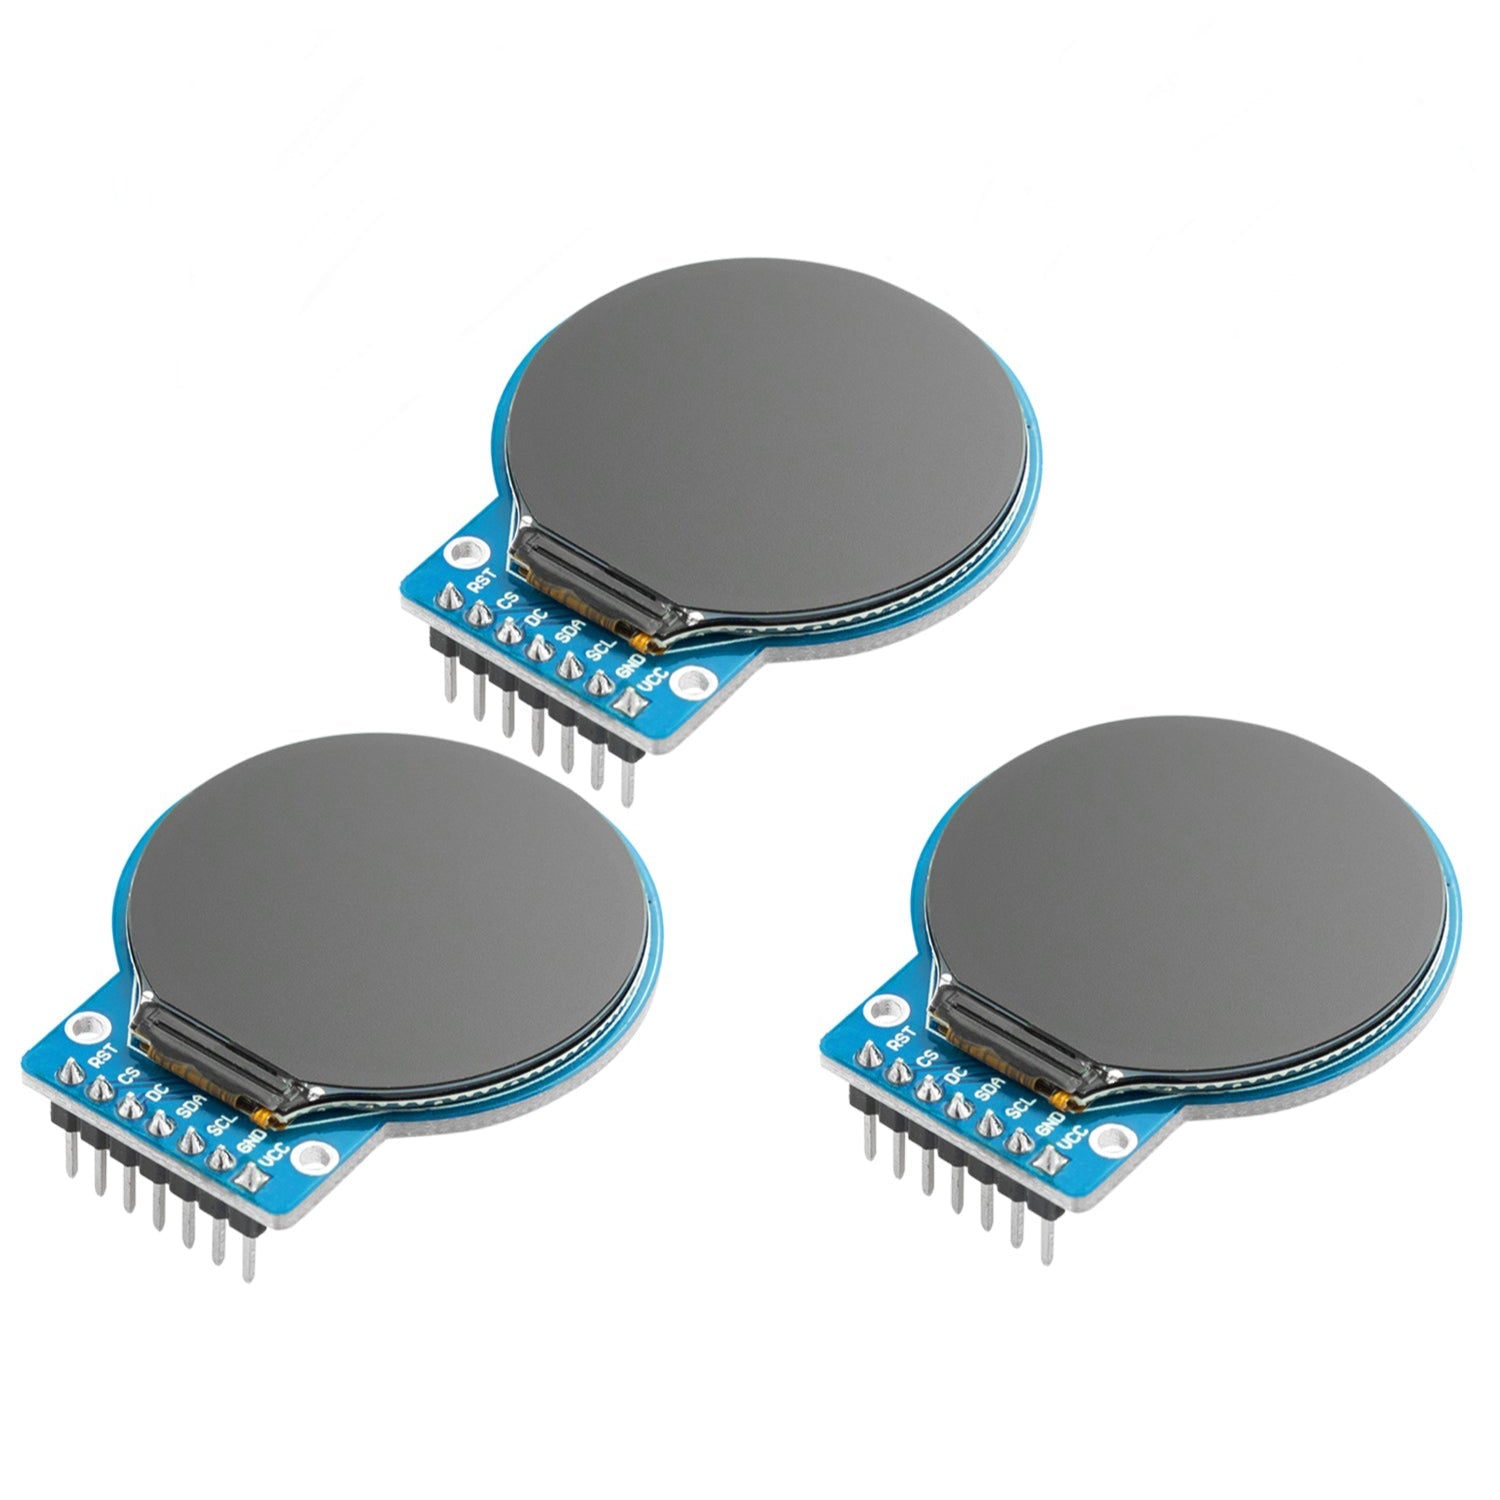 GC9A01 1.28-Zoll Rundes LCD TFT Display für Arduino - AZ-Delivery